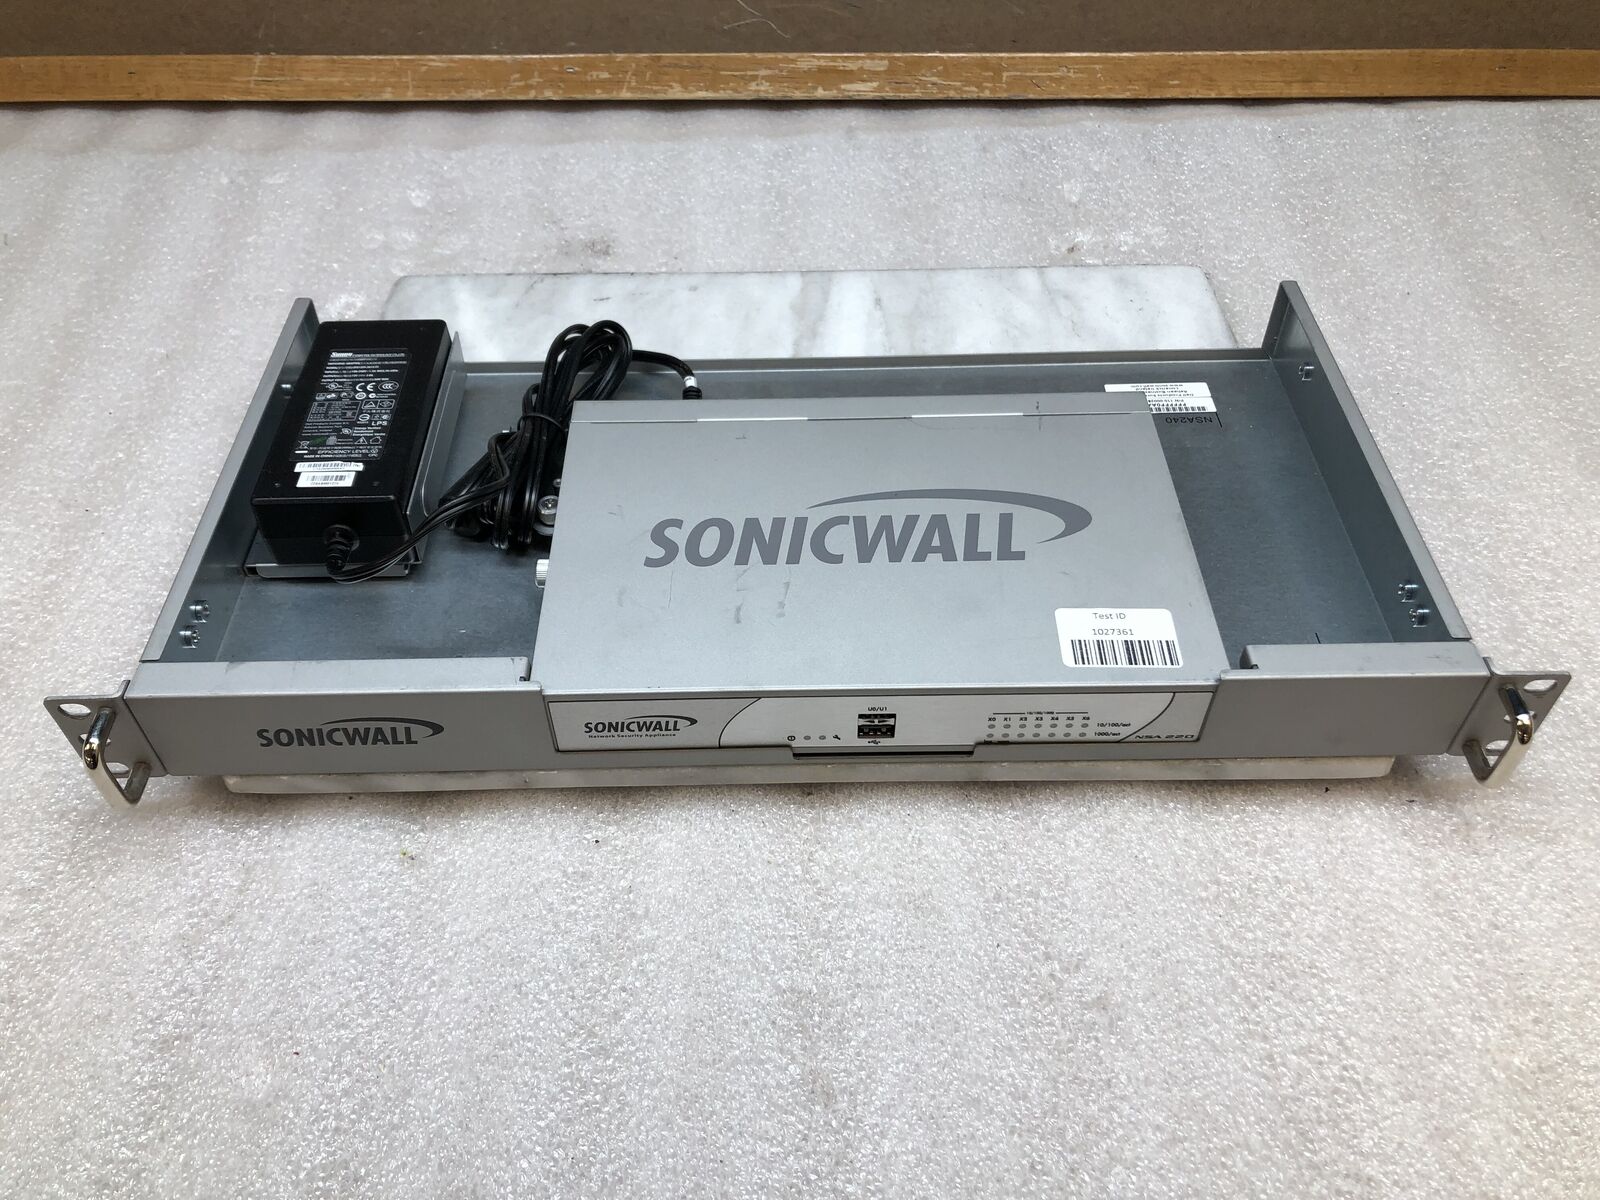 Dell SonicWall NSA220 Firewall Appliance W/ Rack Mount + Power Adapter